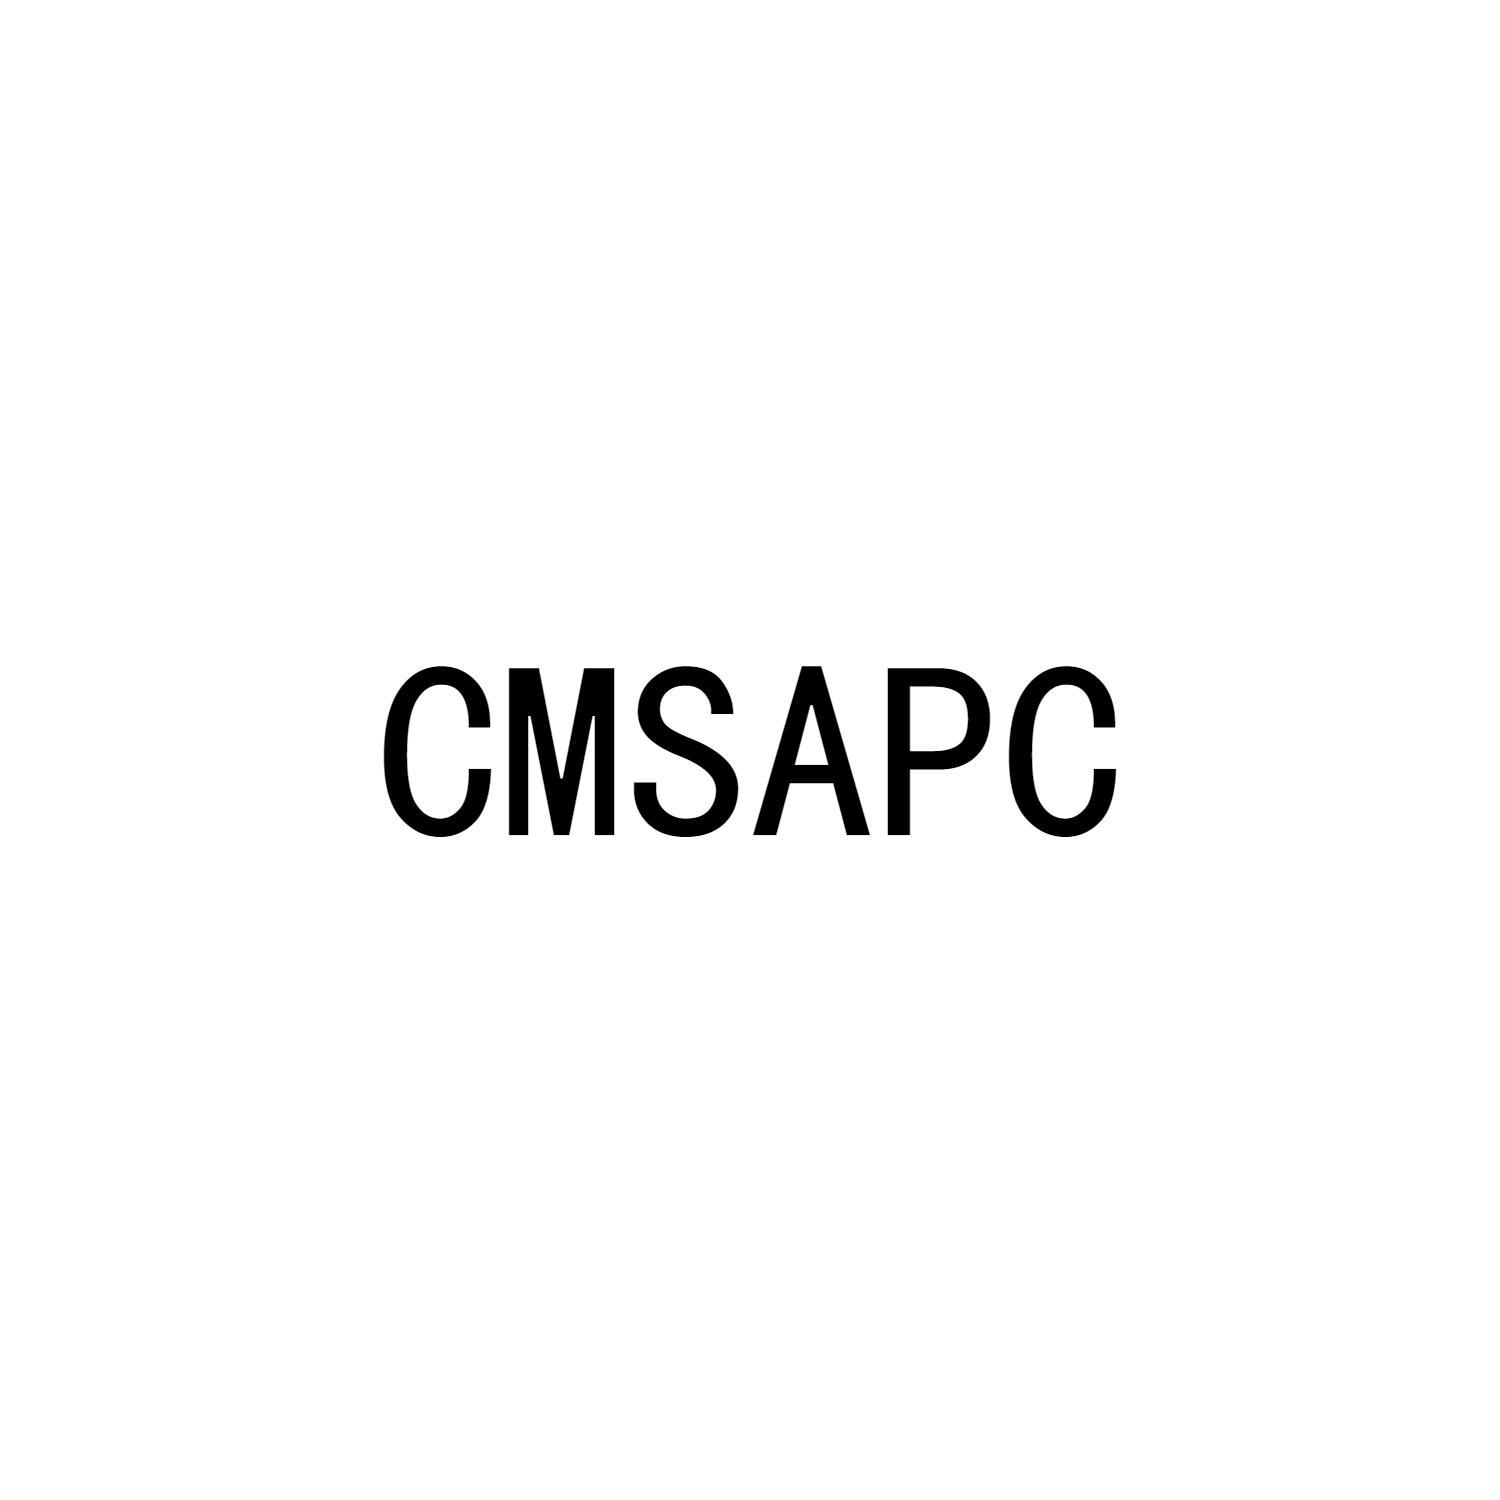 CMSAPC